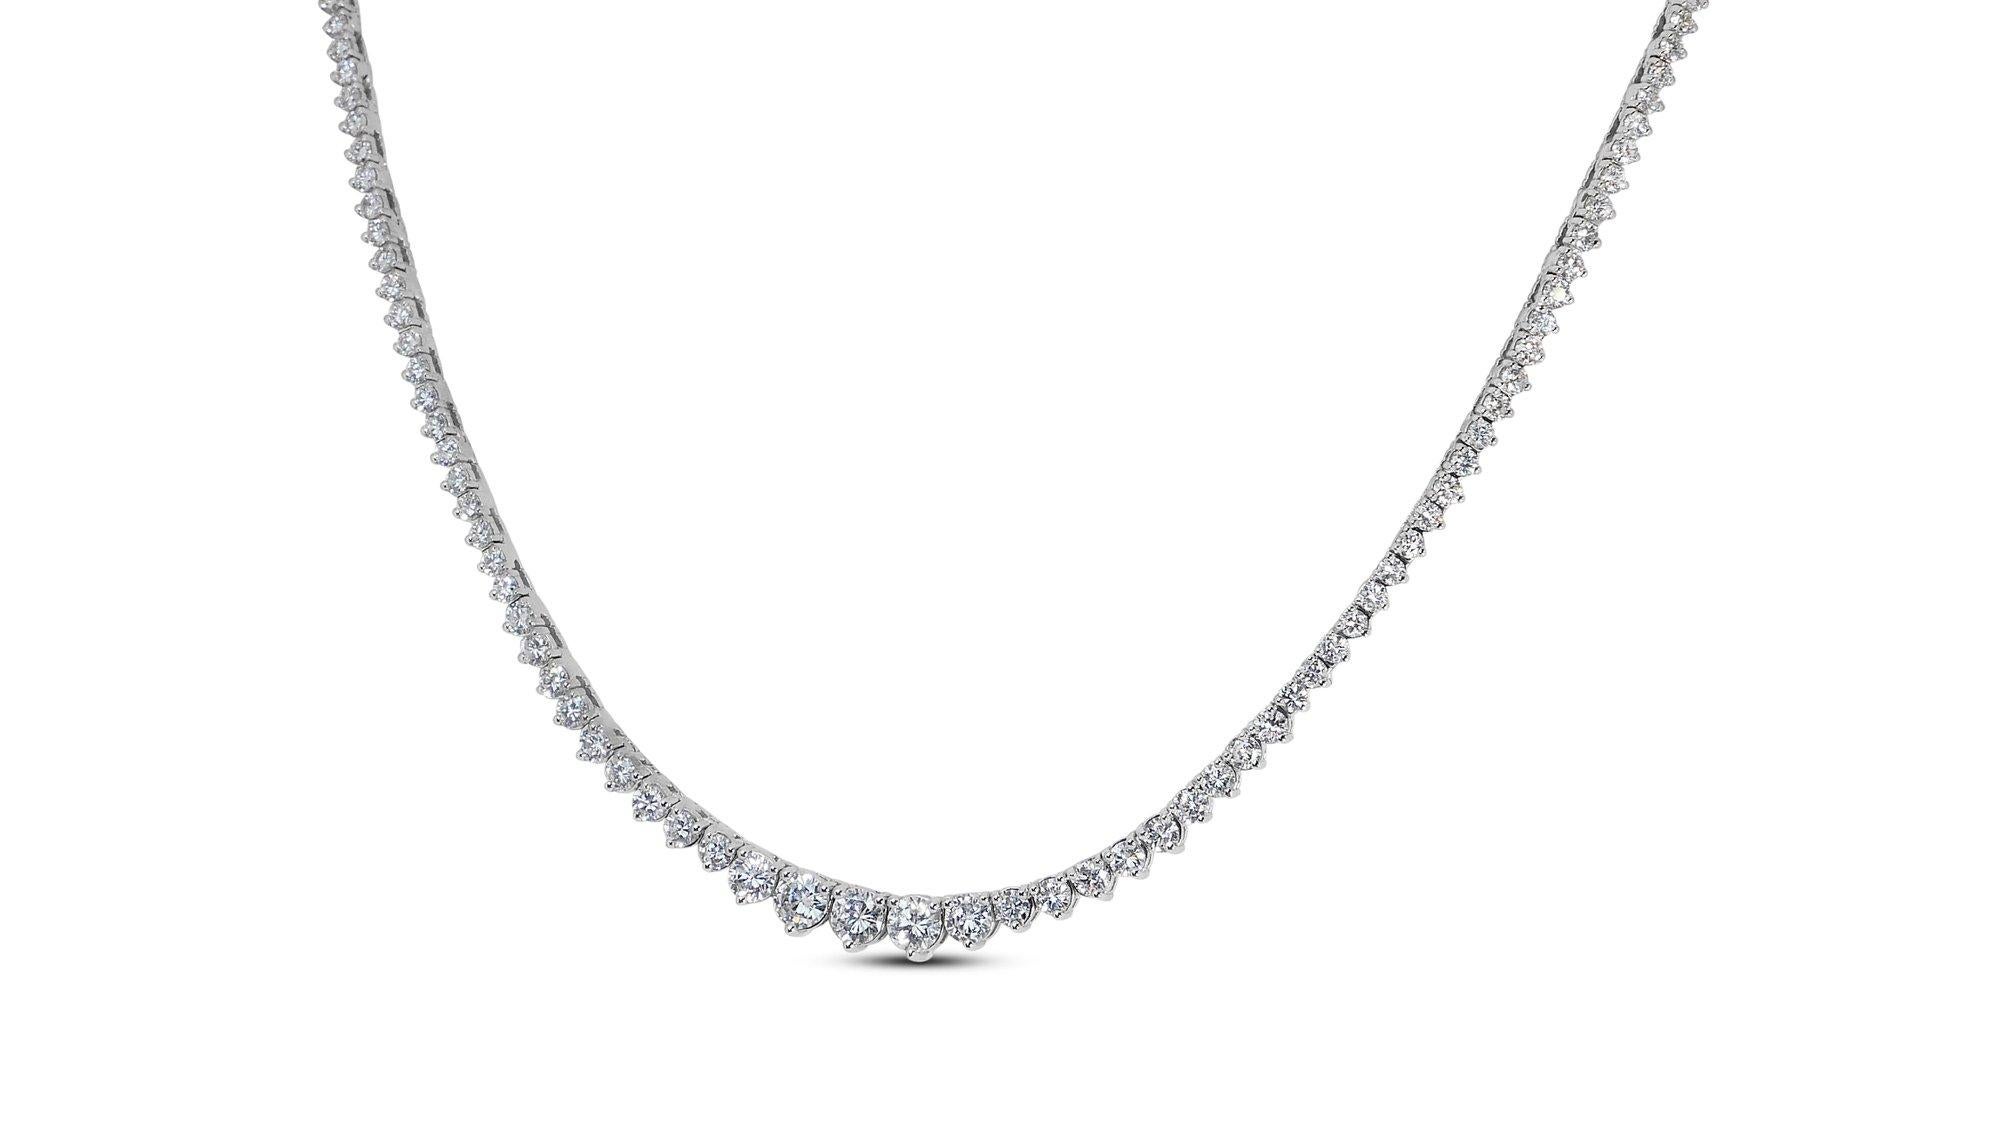 Ravishing 18k White Gold Necklace w/ 5.78 ct Natural Diamonds IGI Certificate For Sale 8